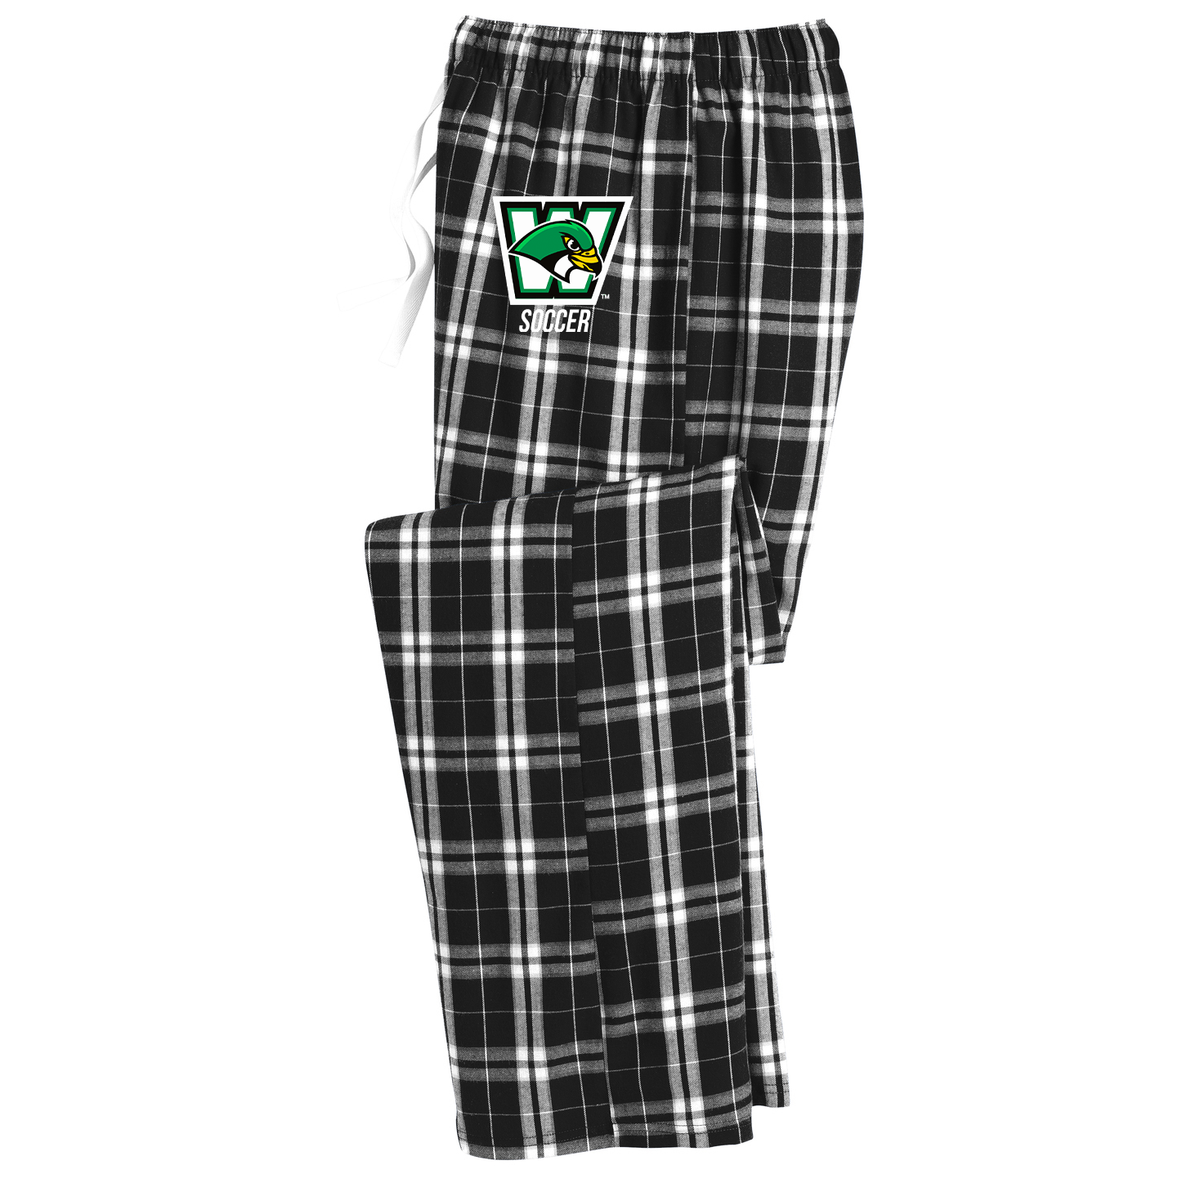 Woodland Falcons High School Soccer Plaid Pajama Pants